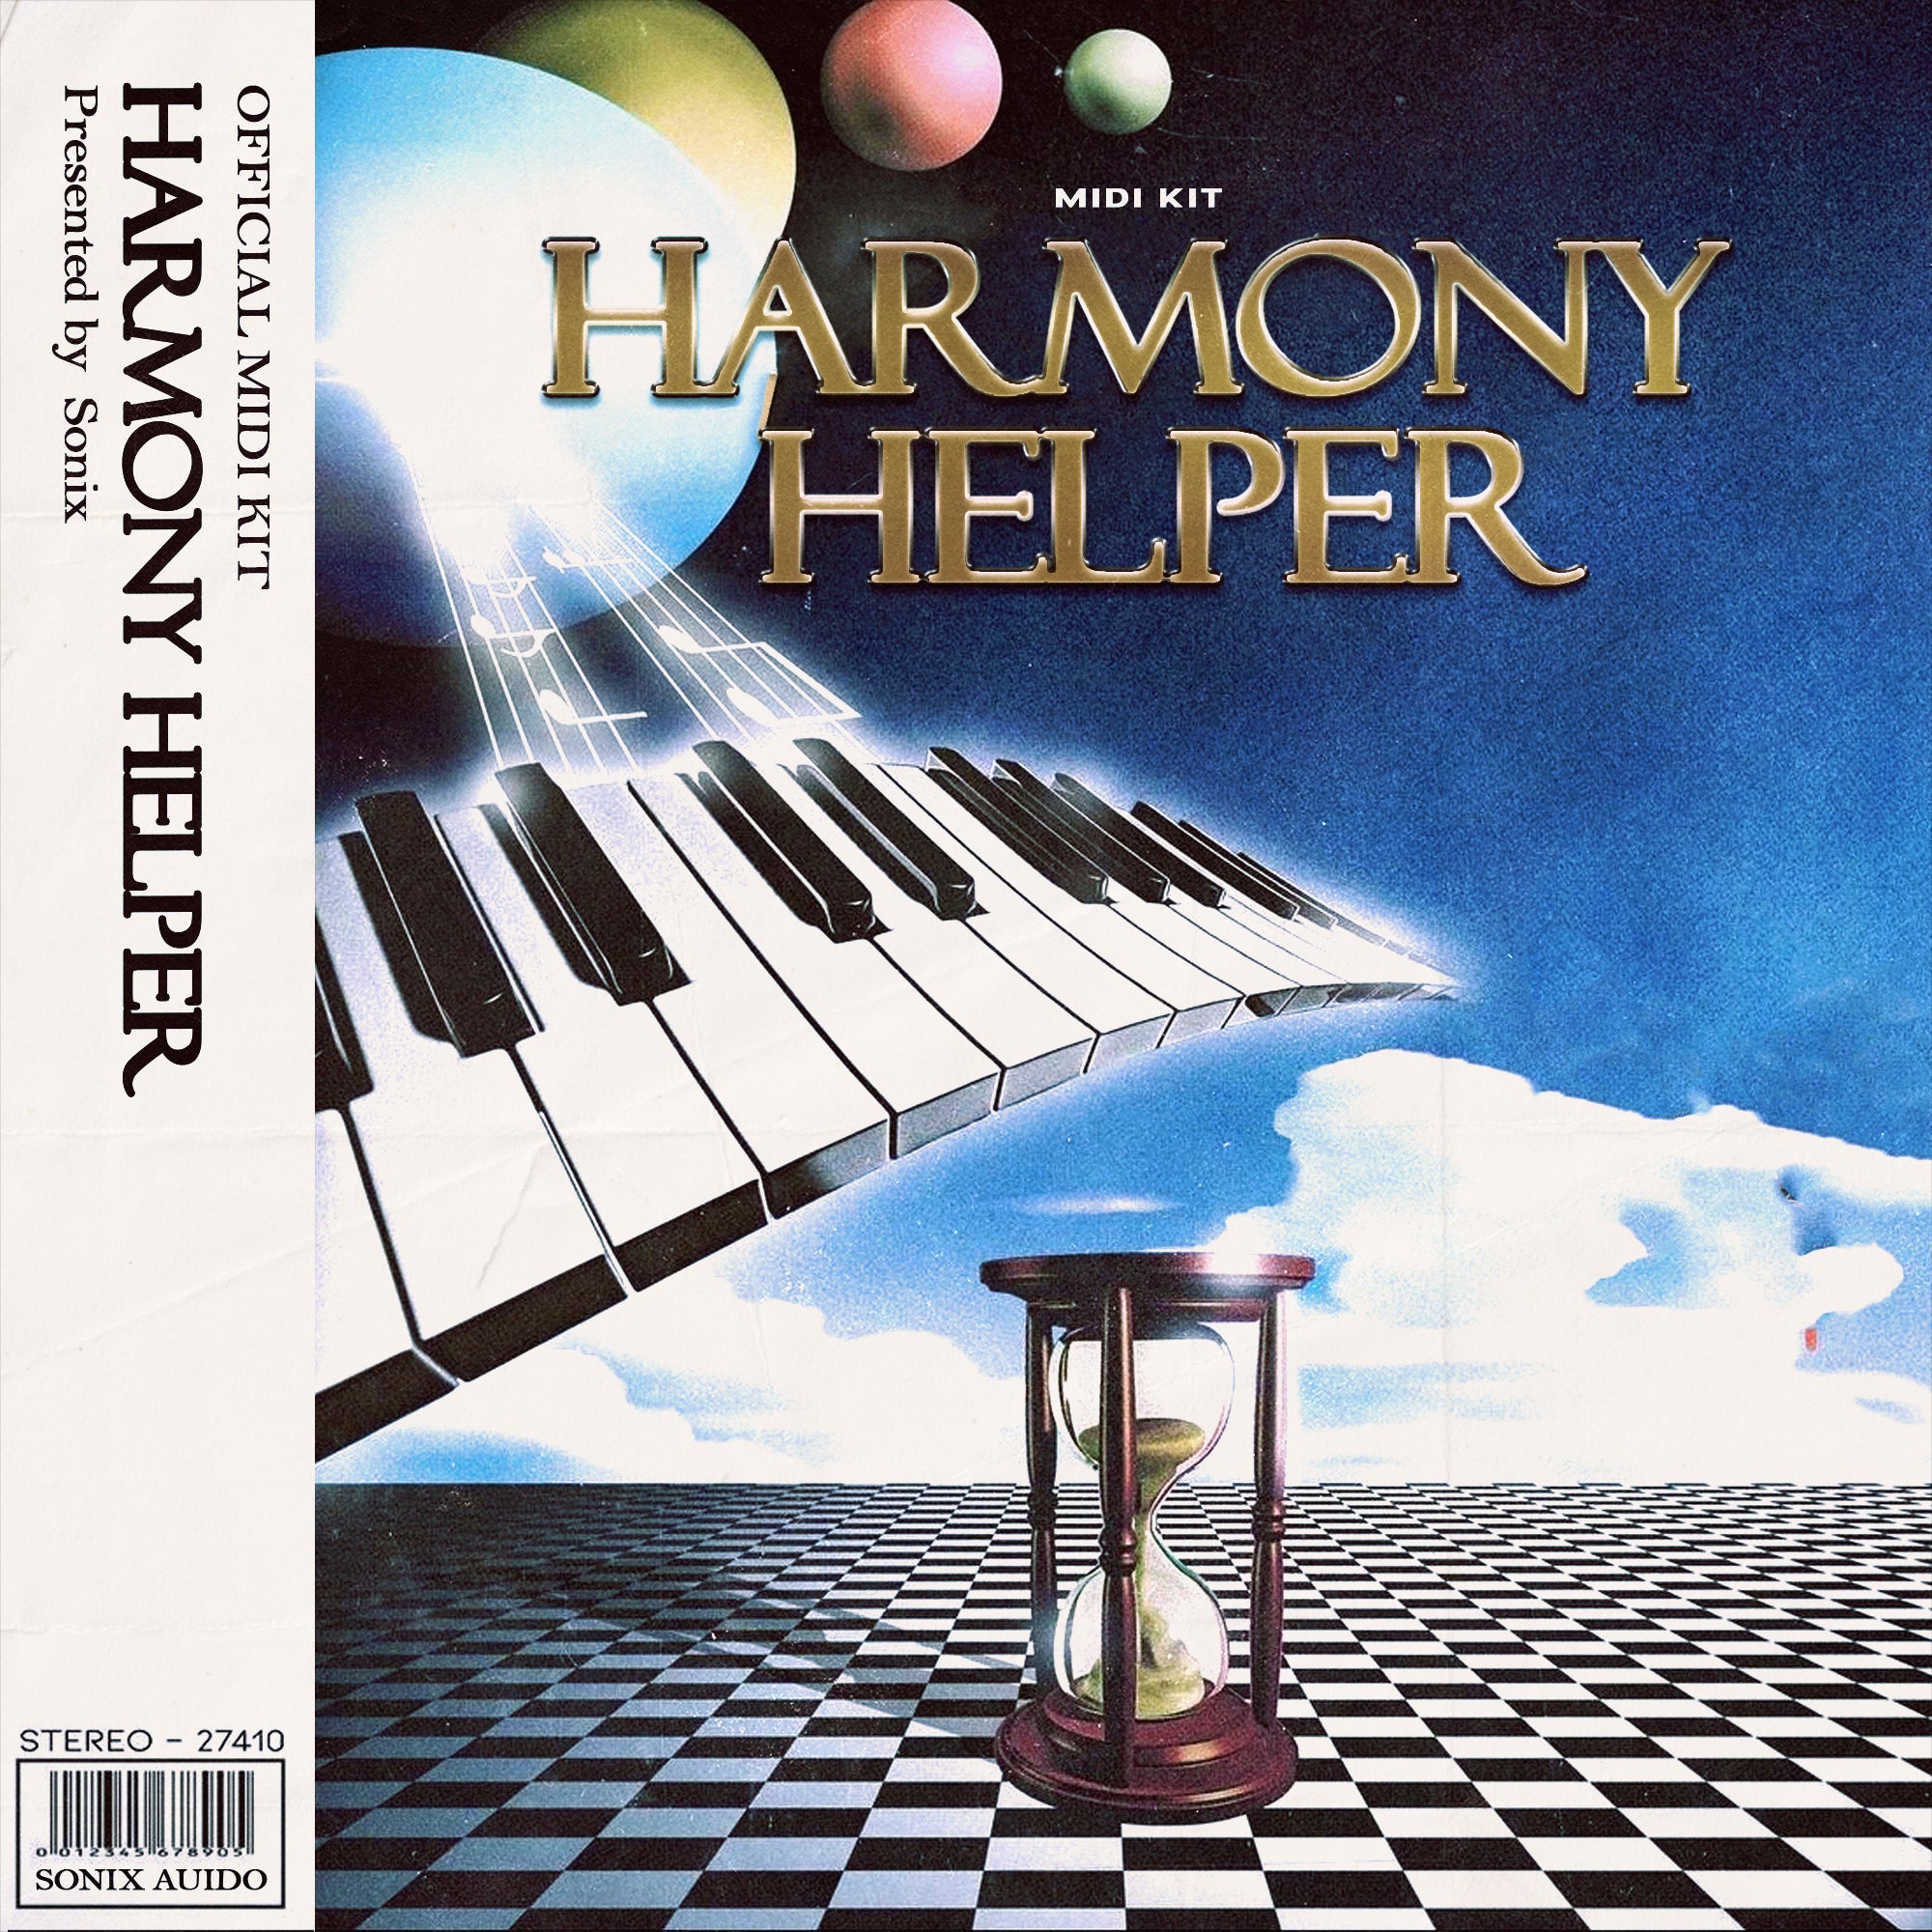 🎹🎶KXVI X VISION "HARMONY HELPER" MIDI KIT